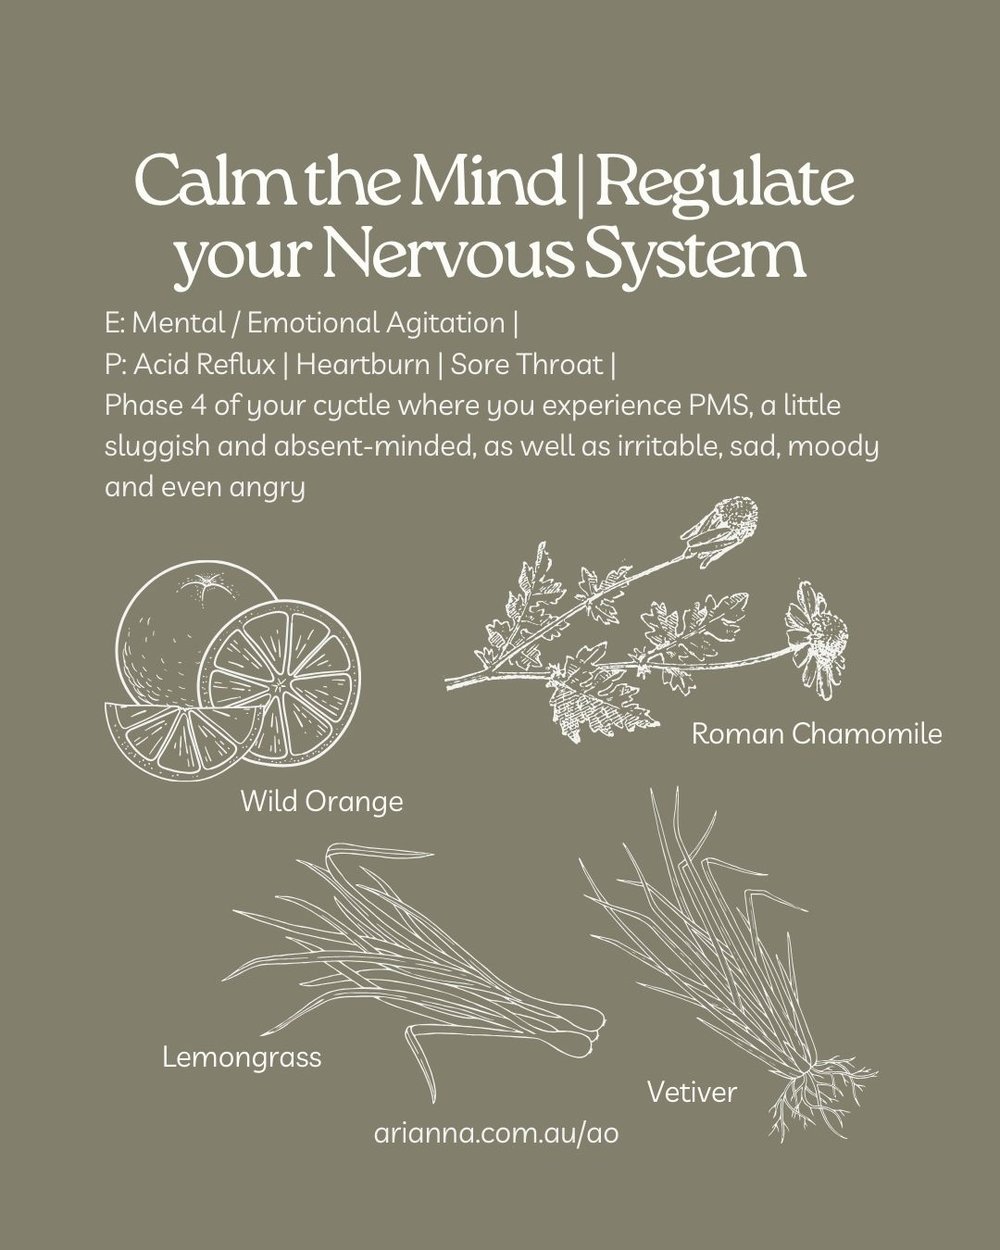 Calming the nervous system aromaenergetics.jpg